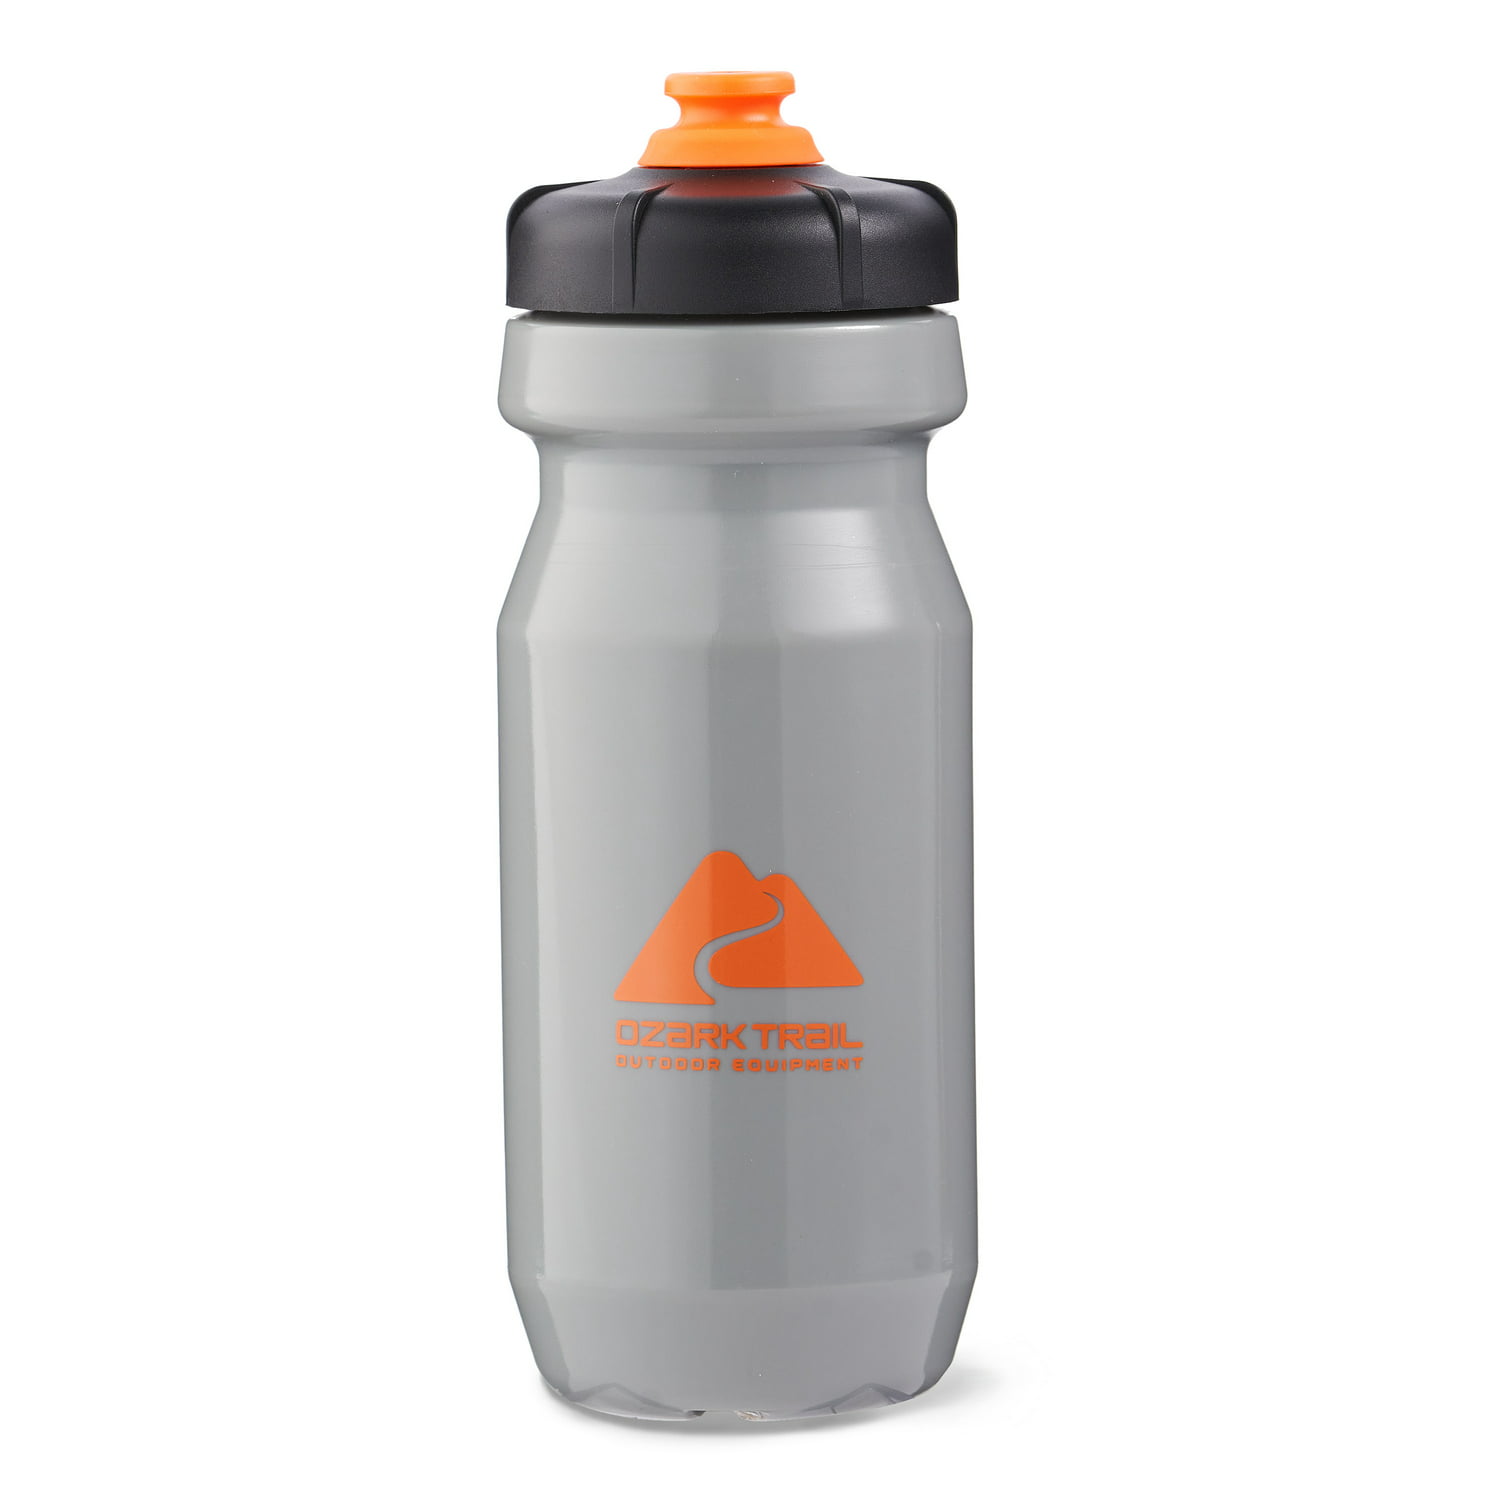 22-Oz Ozark Trail Cycling Water Bottle $7.47 + Free Shipping w/ Walmart+ or on $35+